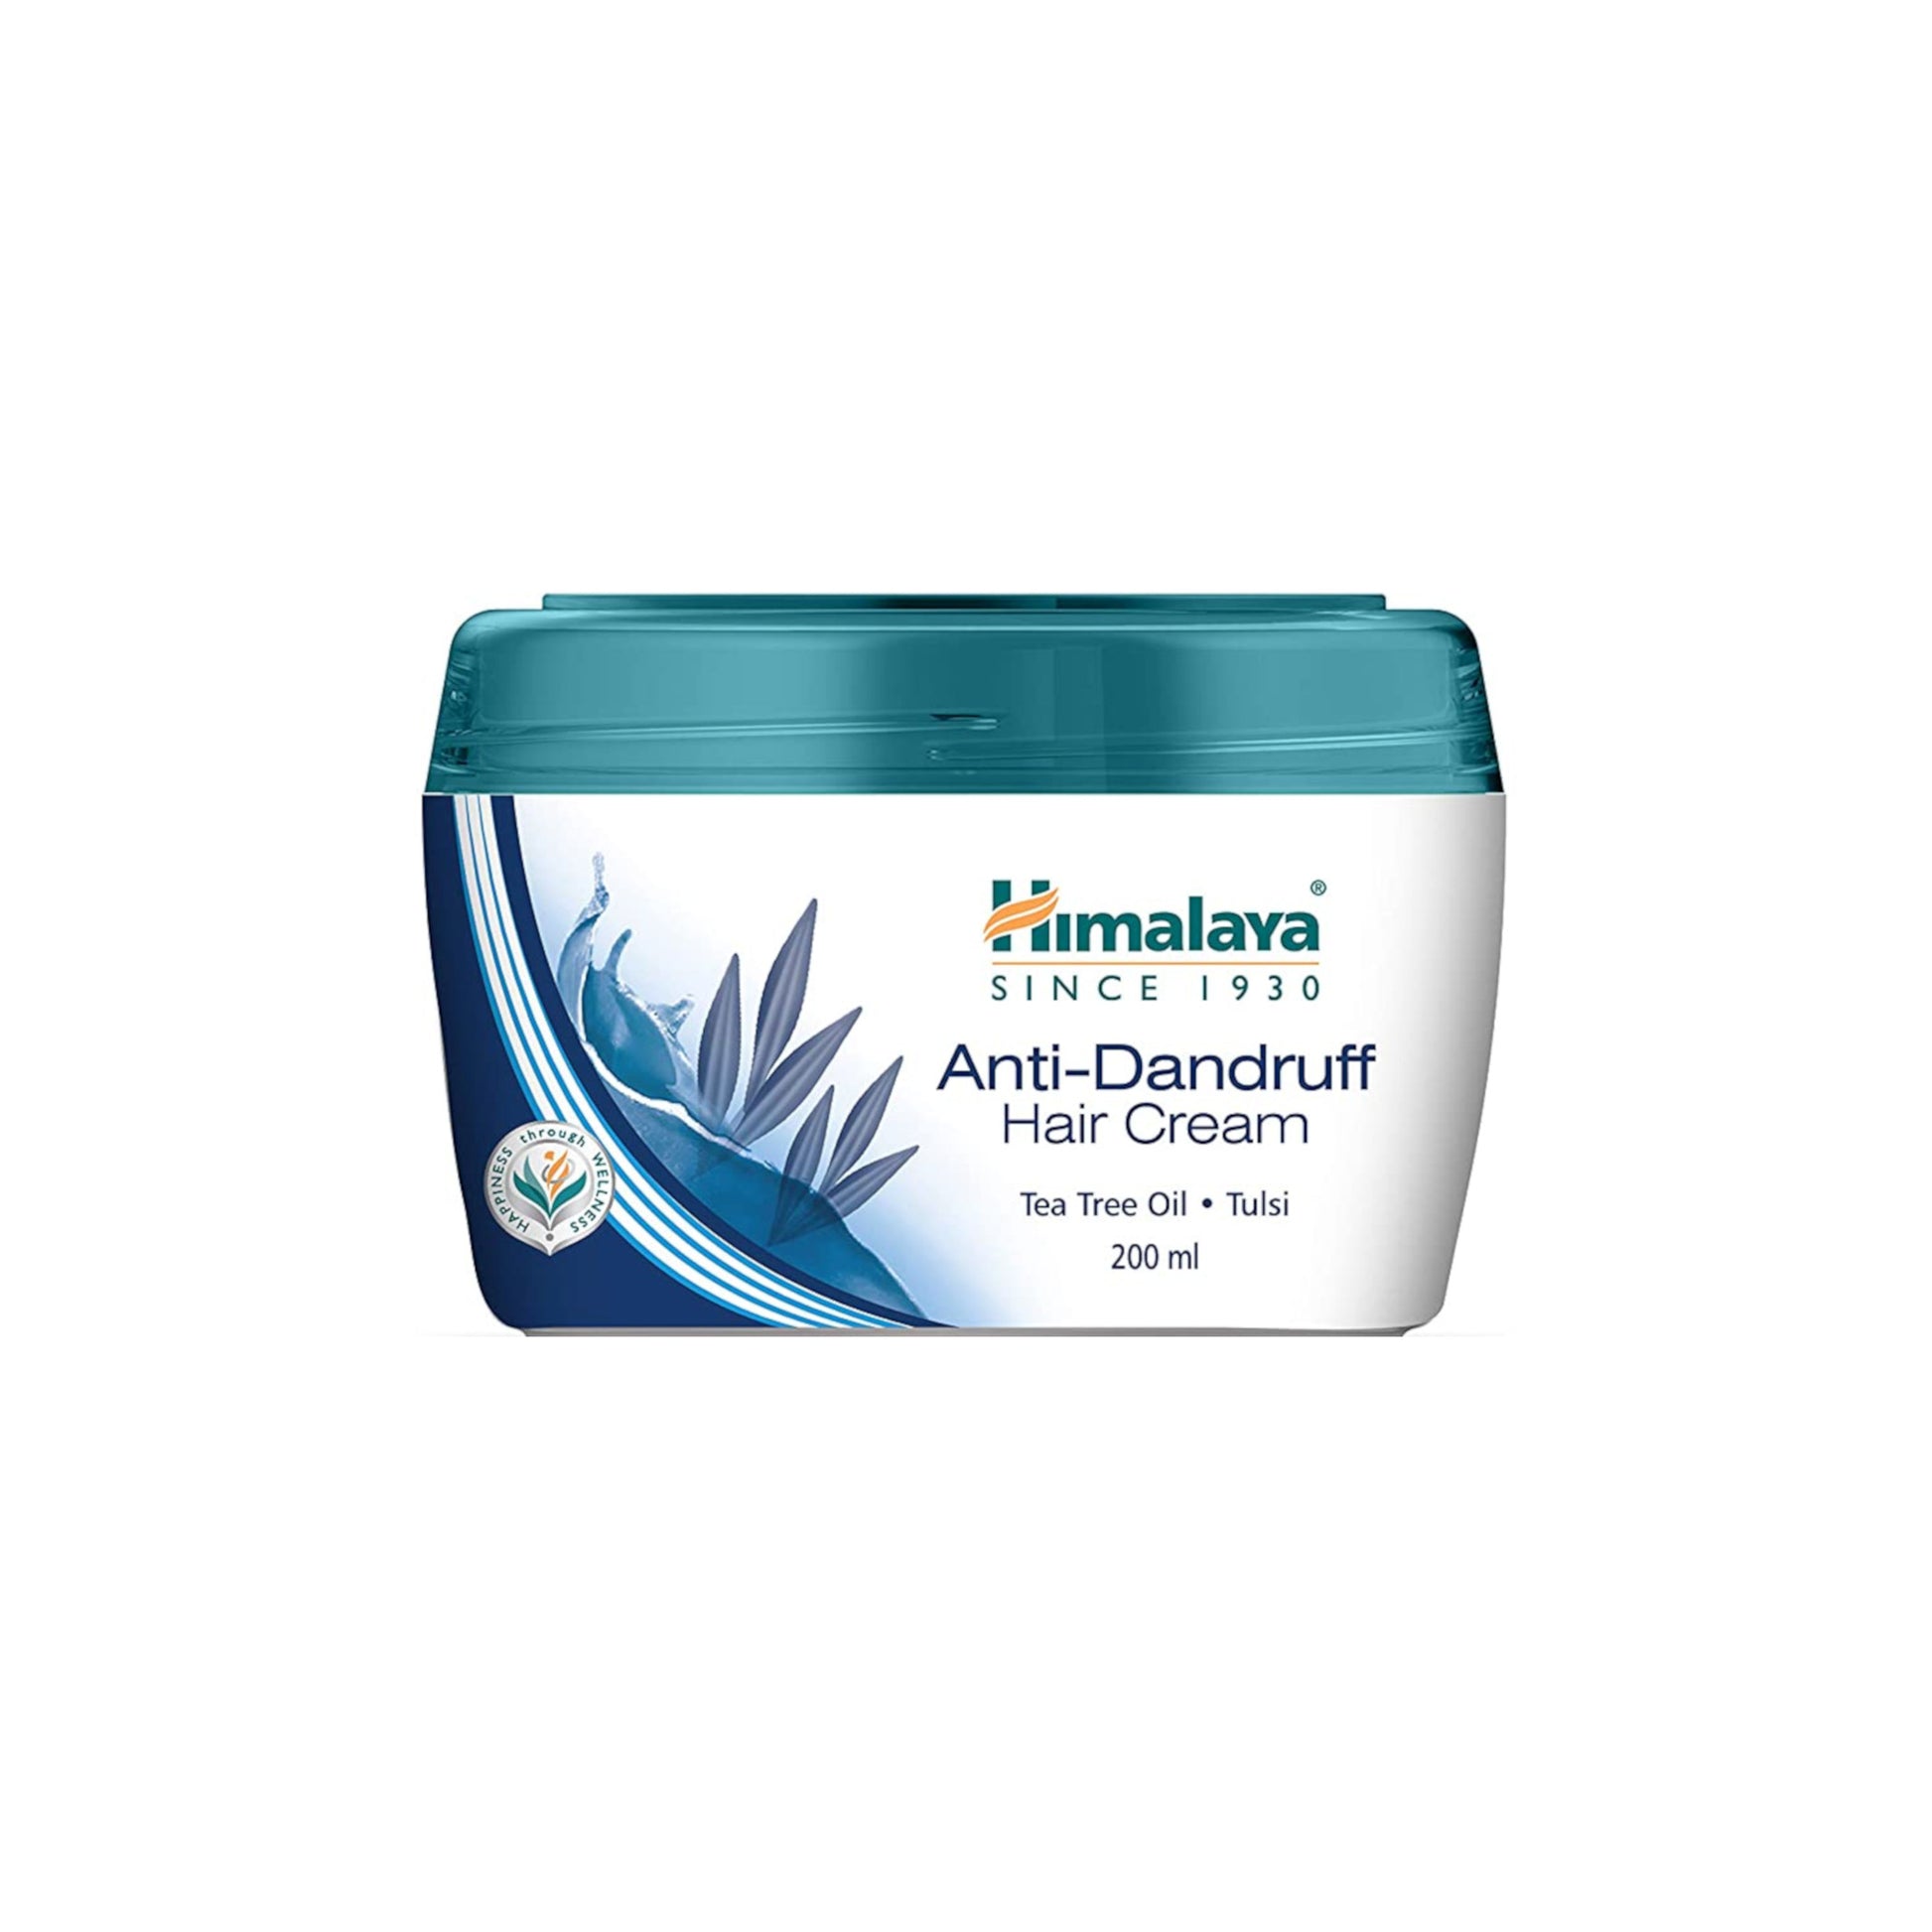 Himalaya Anti-Dandruff Hair Cream 100 g - Dandruff control and scalp care with herbal ingredients.